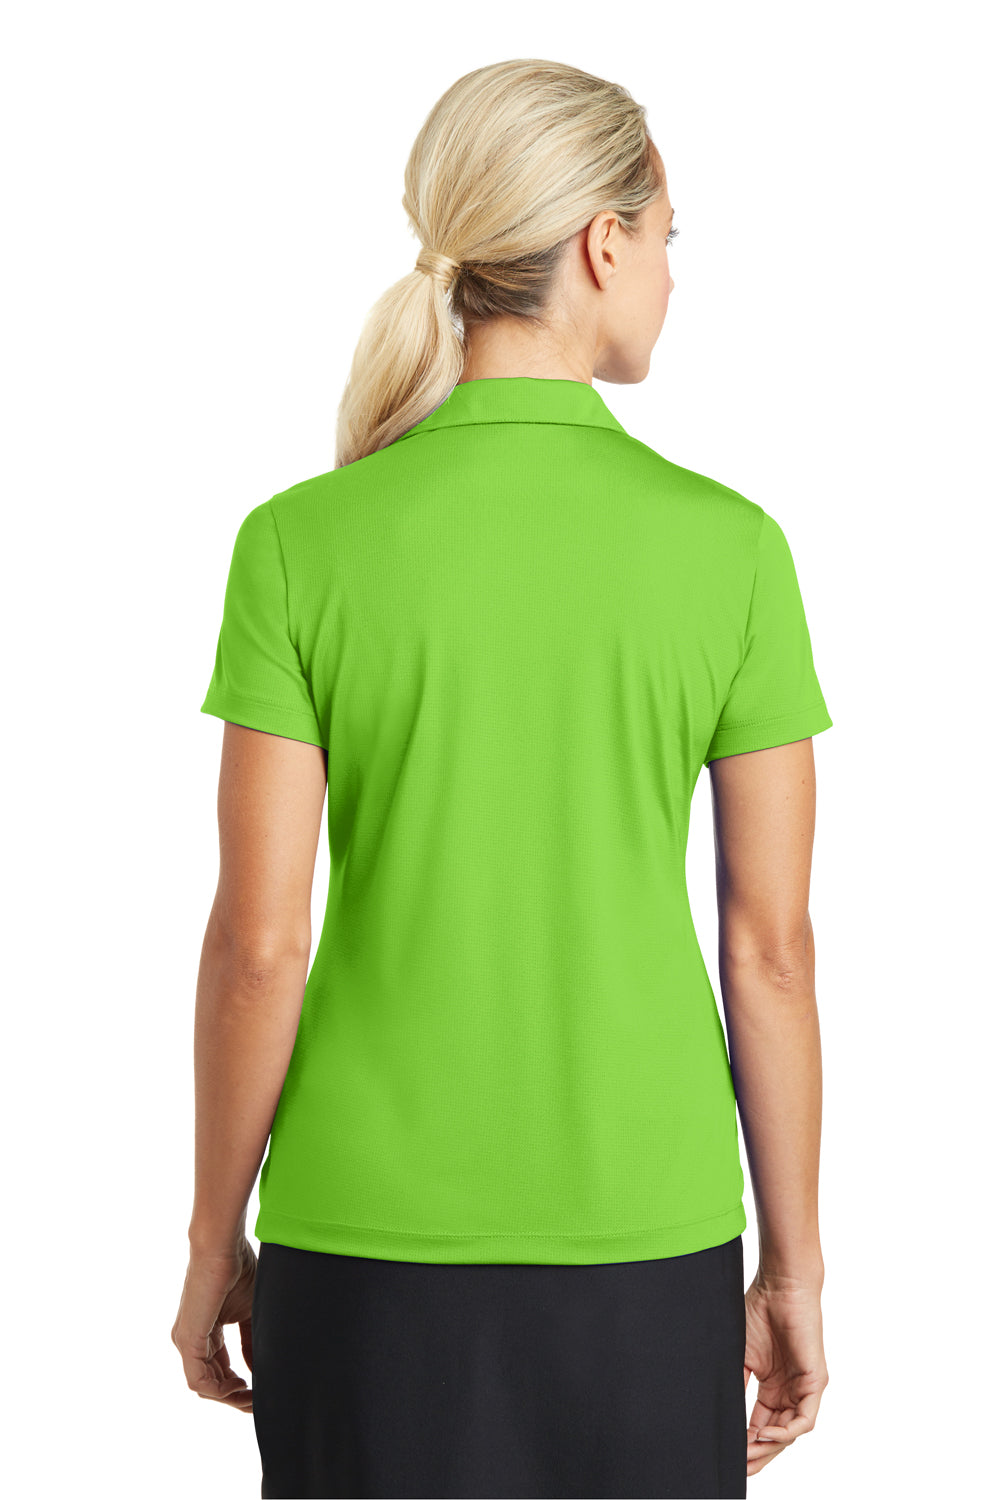 Nike 637165 Womens Dri-Fit Moisture Wicking Short Sleeve Polo Shirt Action Green Back